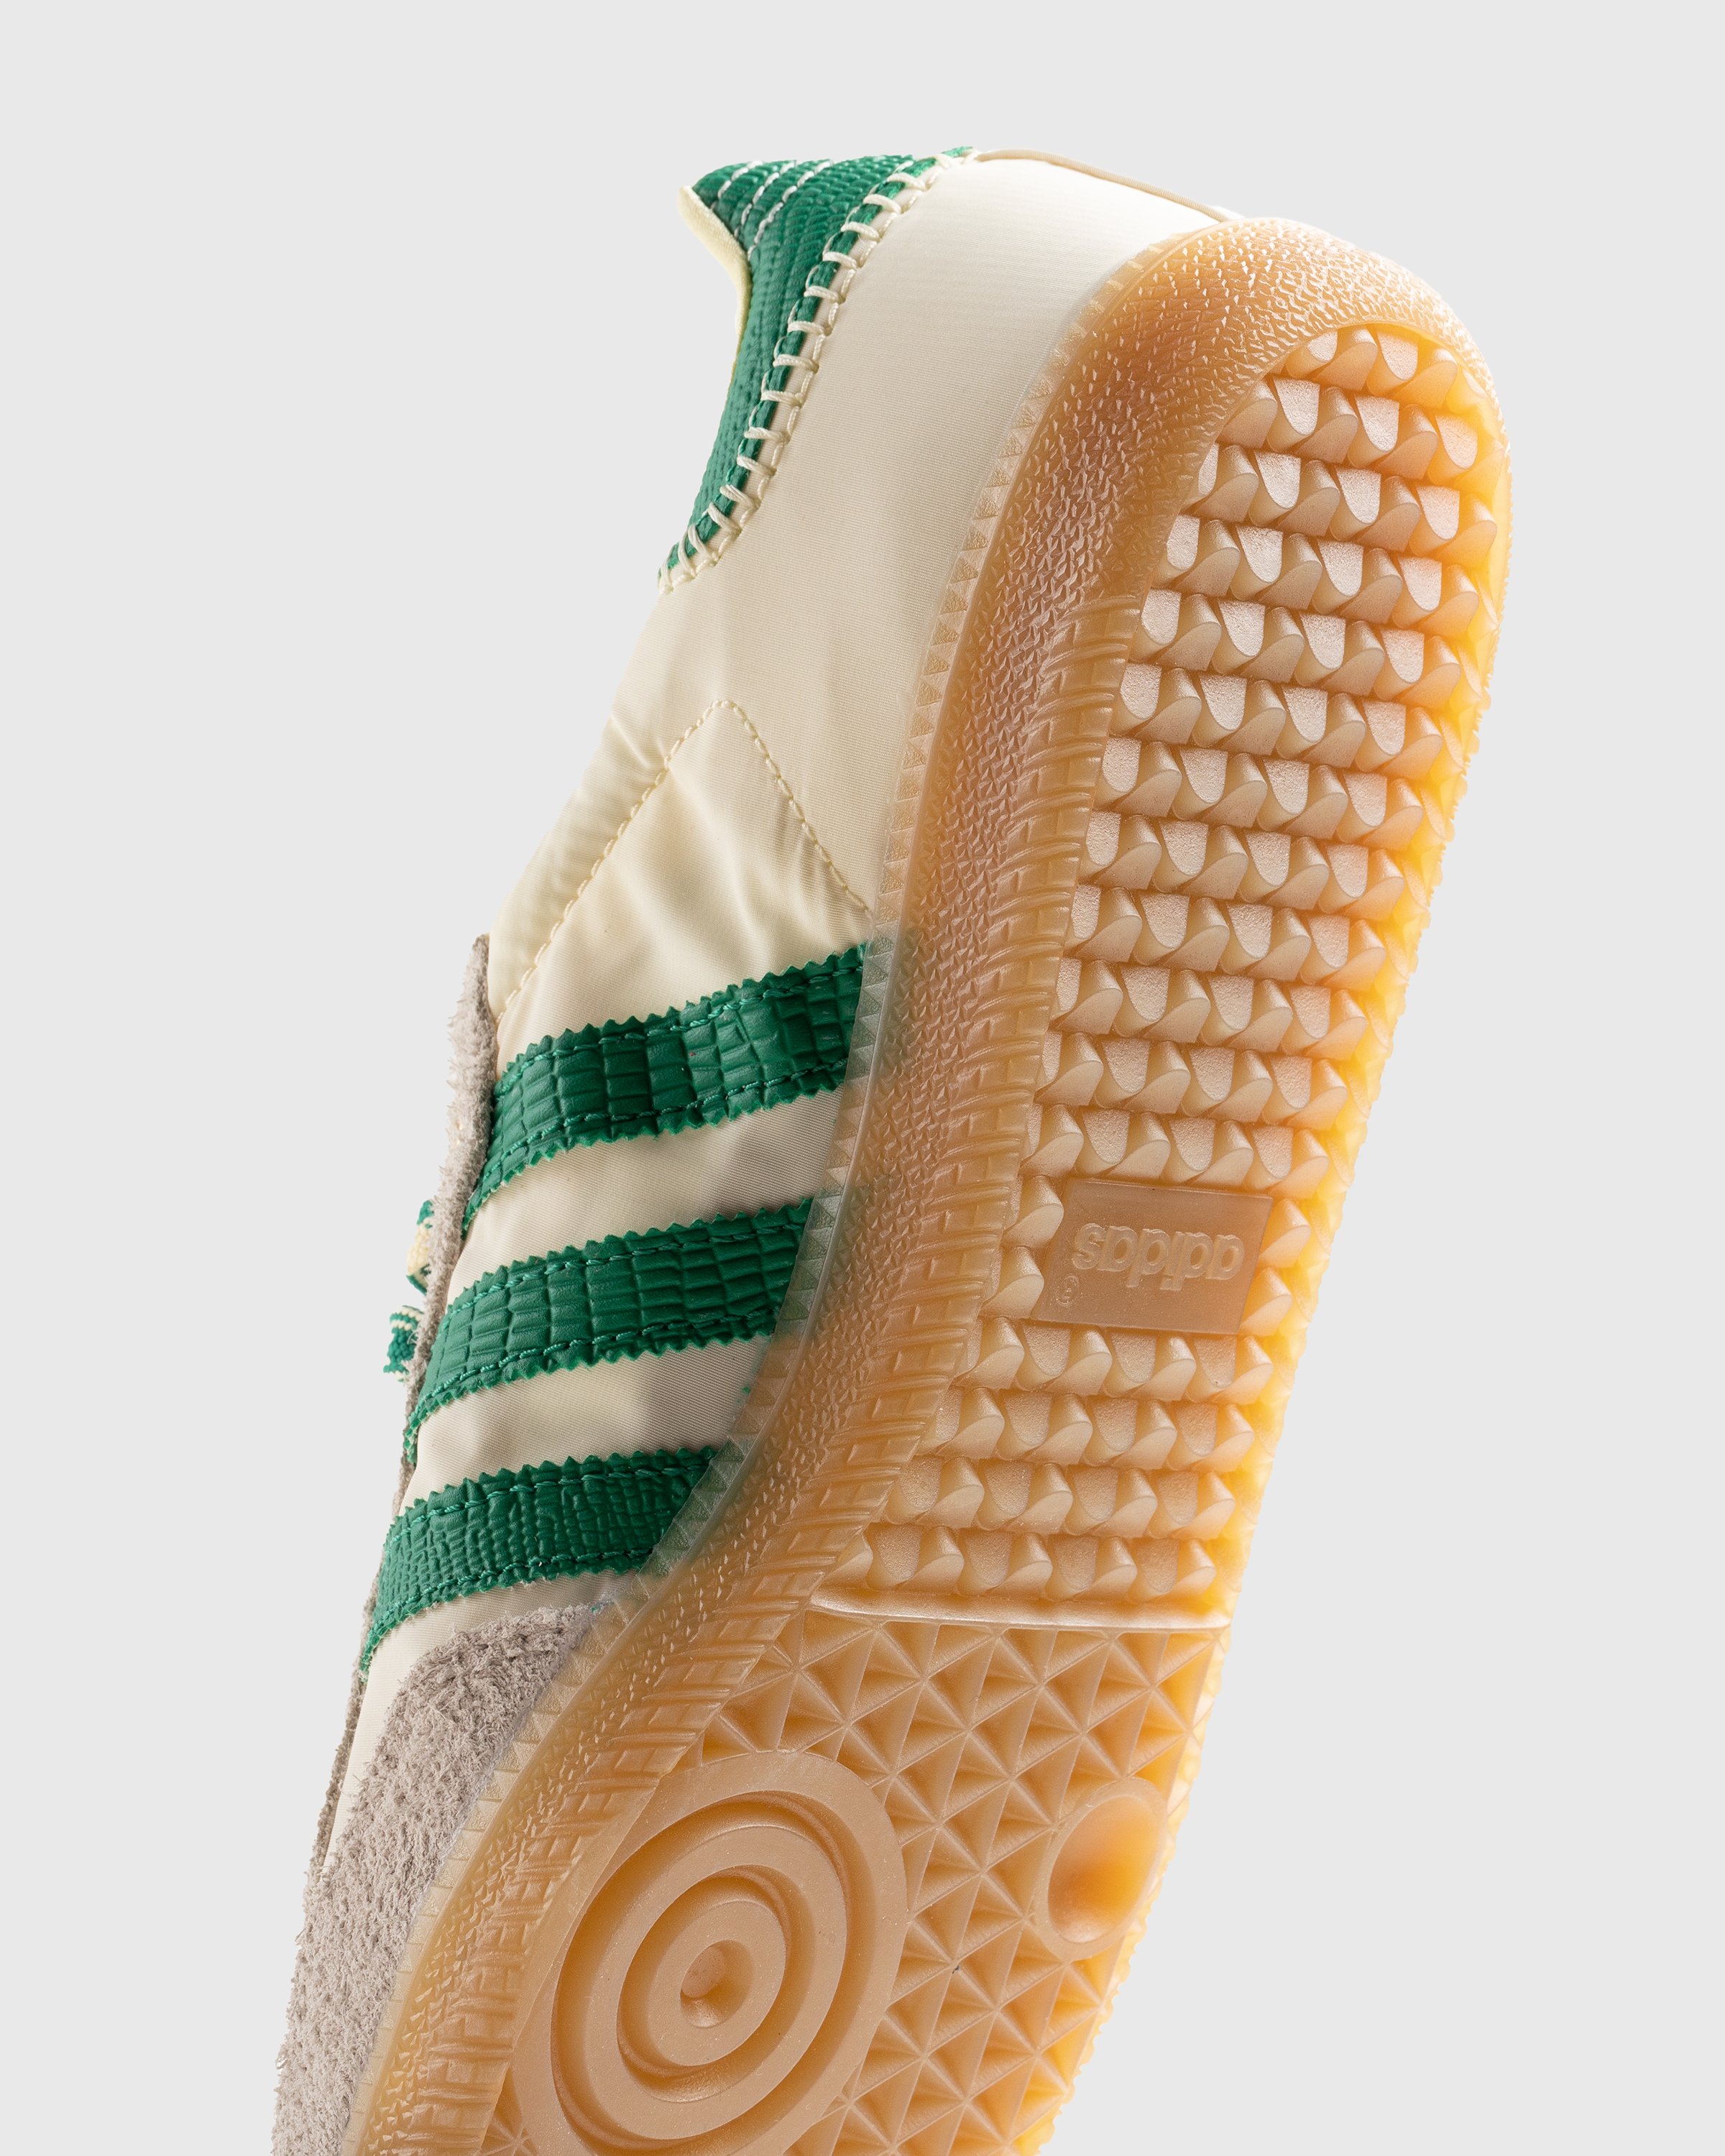 Adidas x Wales Bonner - WB Samba Cream White/Bold Green/Easy Yellow - Footwear - Beige - Image 6